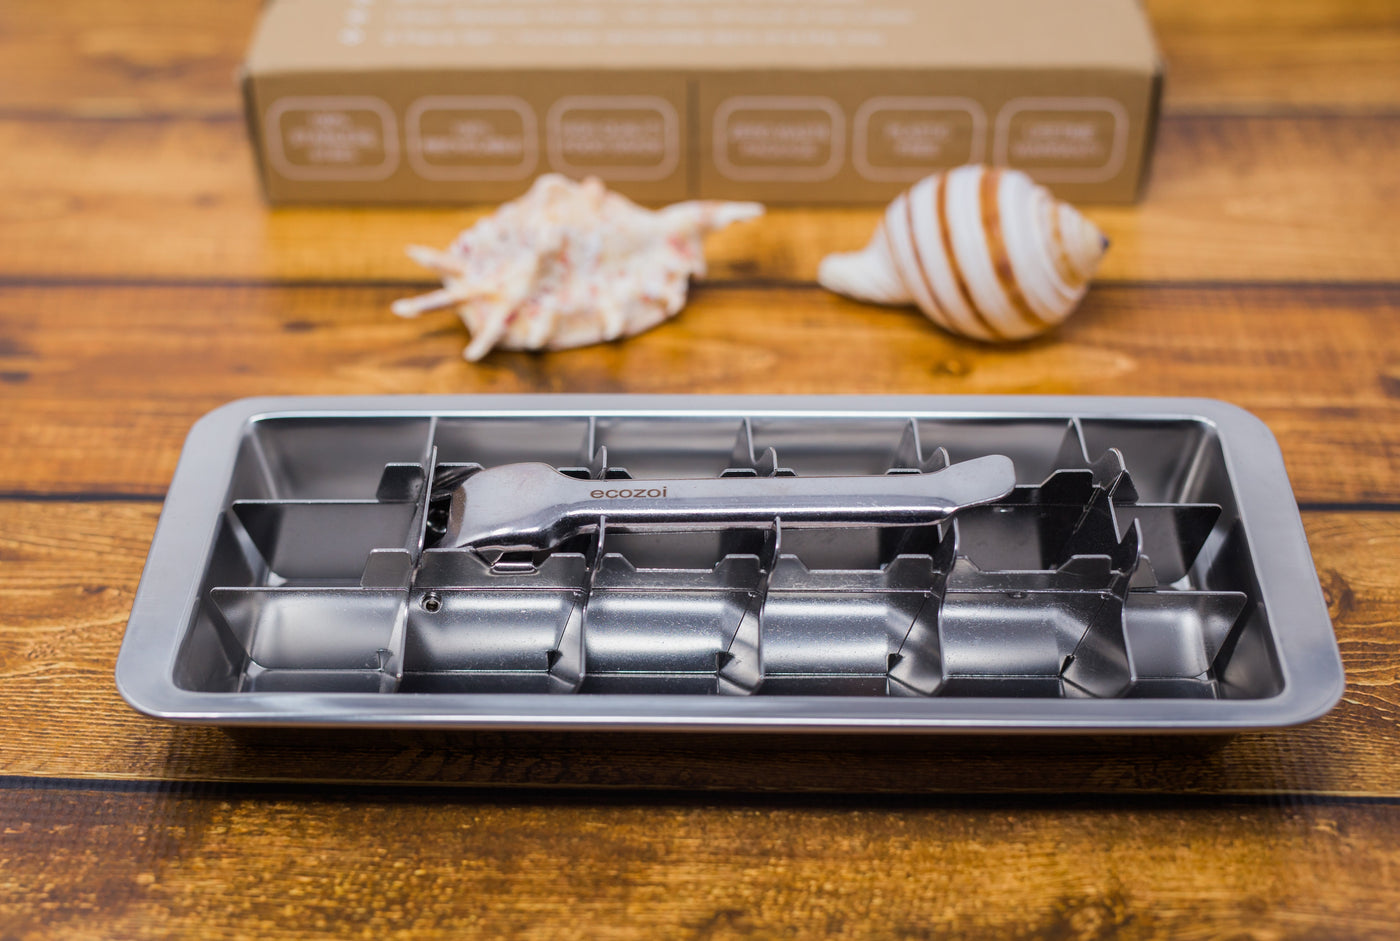 Ecozoi Stainless Steel Ice Cube Tray with Easy Release Handle [BPA free, plastic free, metal ice tray] freeshipping - ecozoi